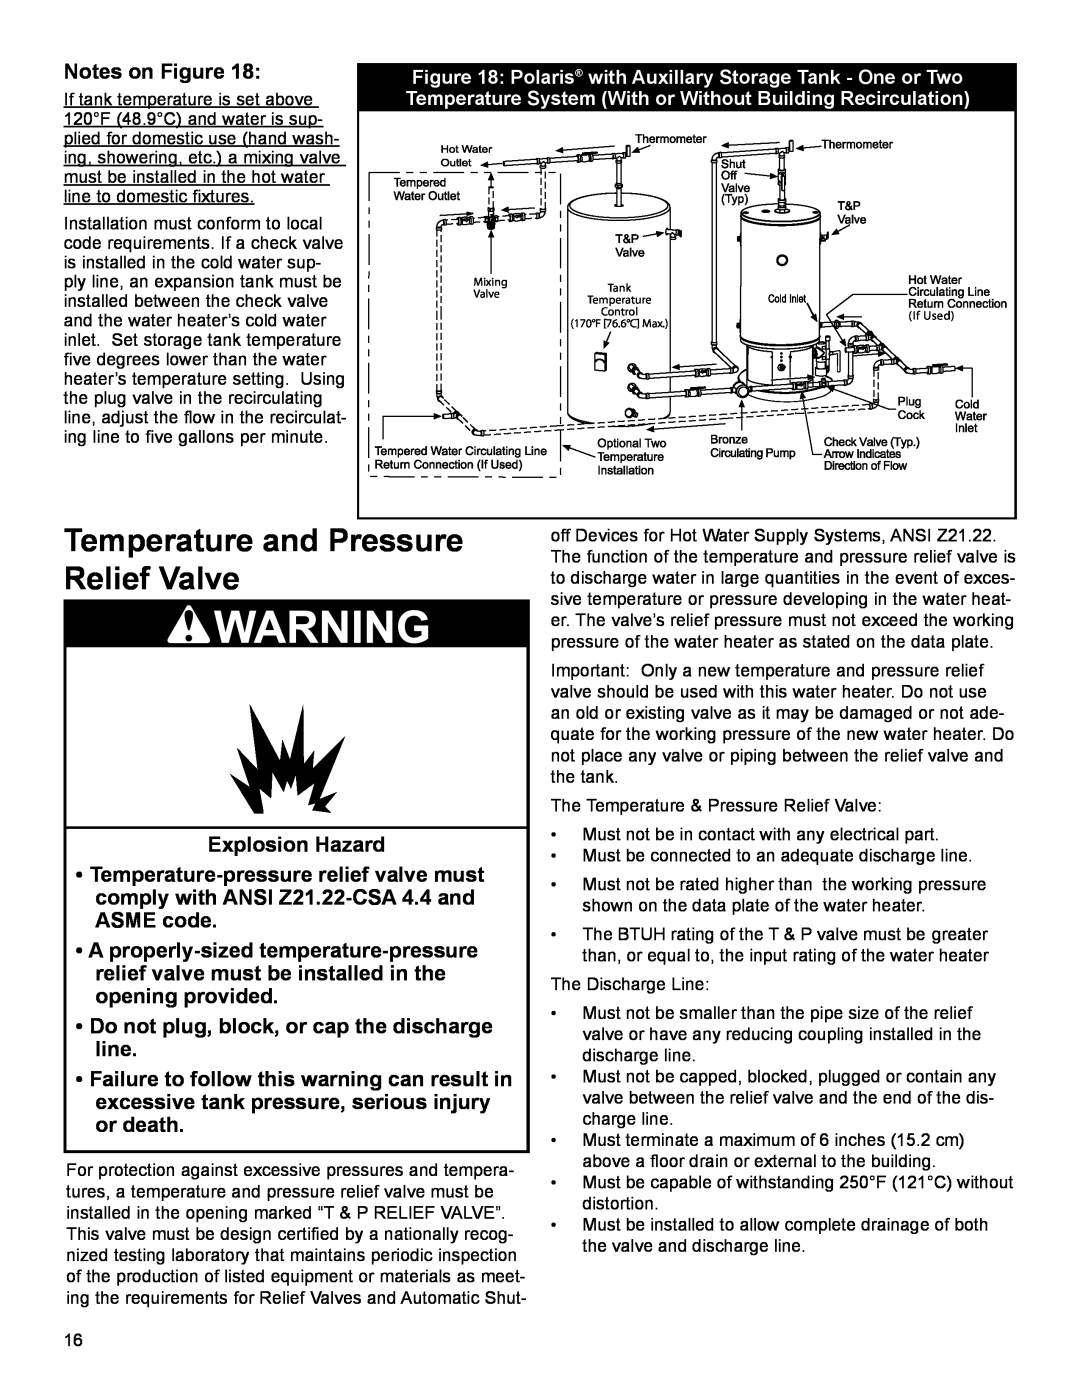 Polaris PC 130-34 2NV, PC 175-50 3NV Temperature and Pressure Relief Valve, Notes on Figure, Explosion Hazard 